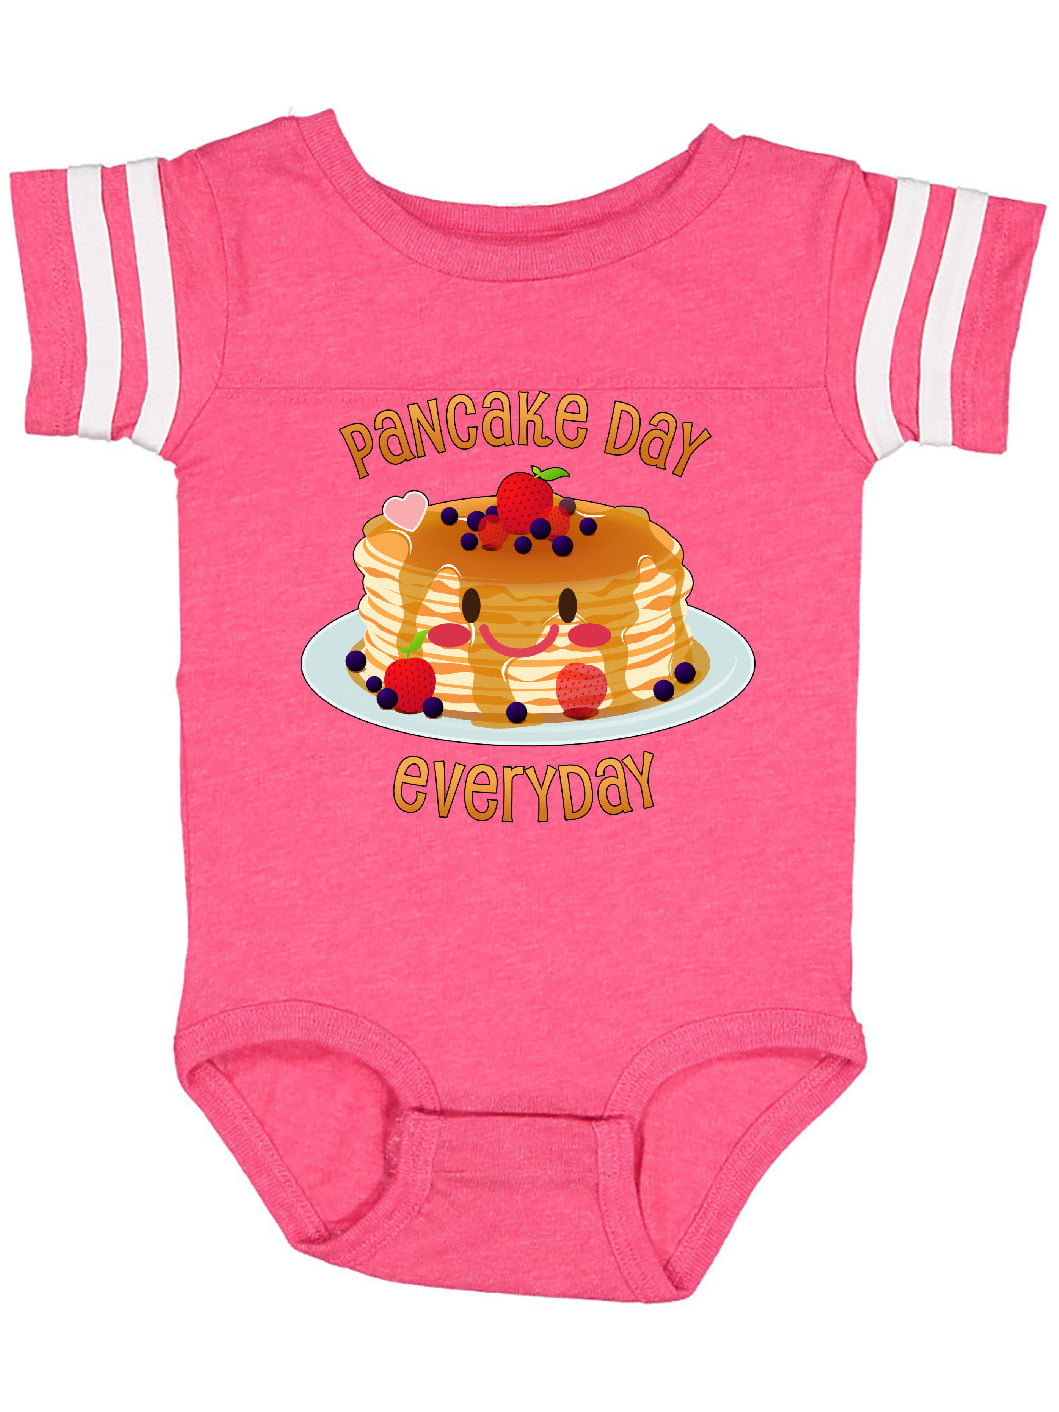 Happy Pancake Day Boys Girls Baby Grow Sleepsuit 